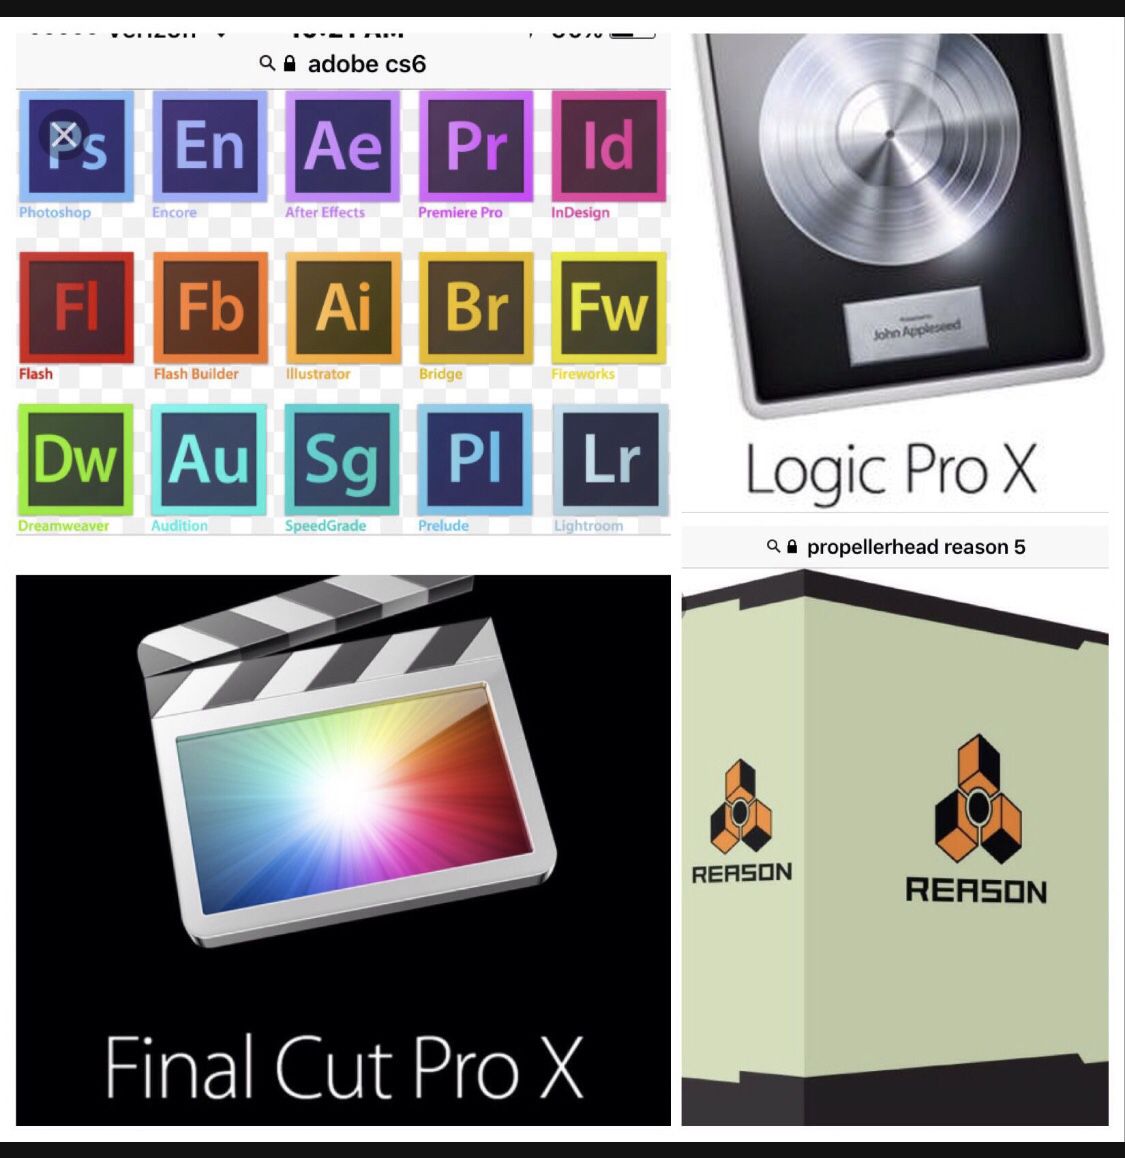 Adobe CS6 Master collection, Reason 5, for Mac/PC, Final Cut X, Logic Pro X 10.2, for Mac & more